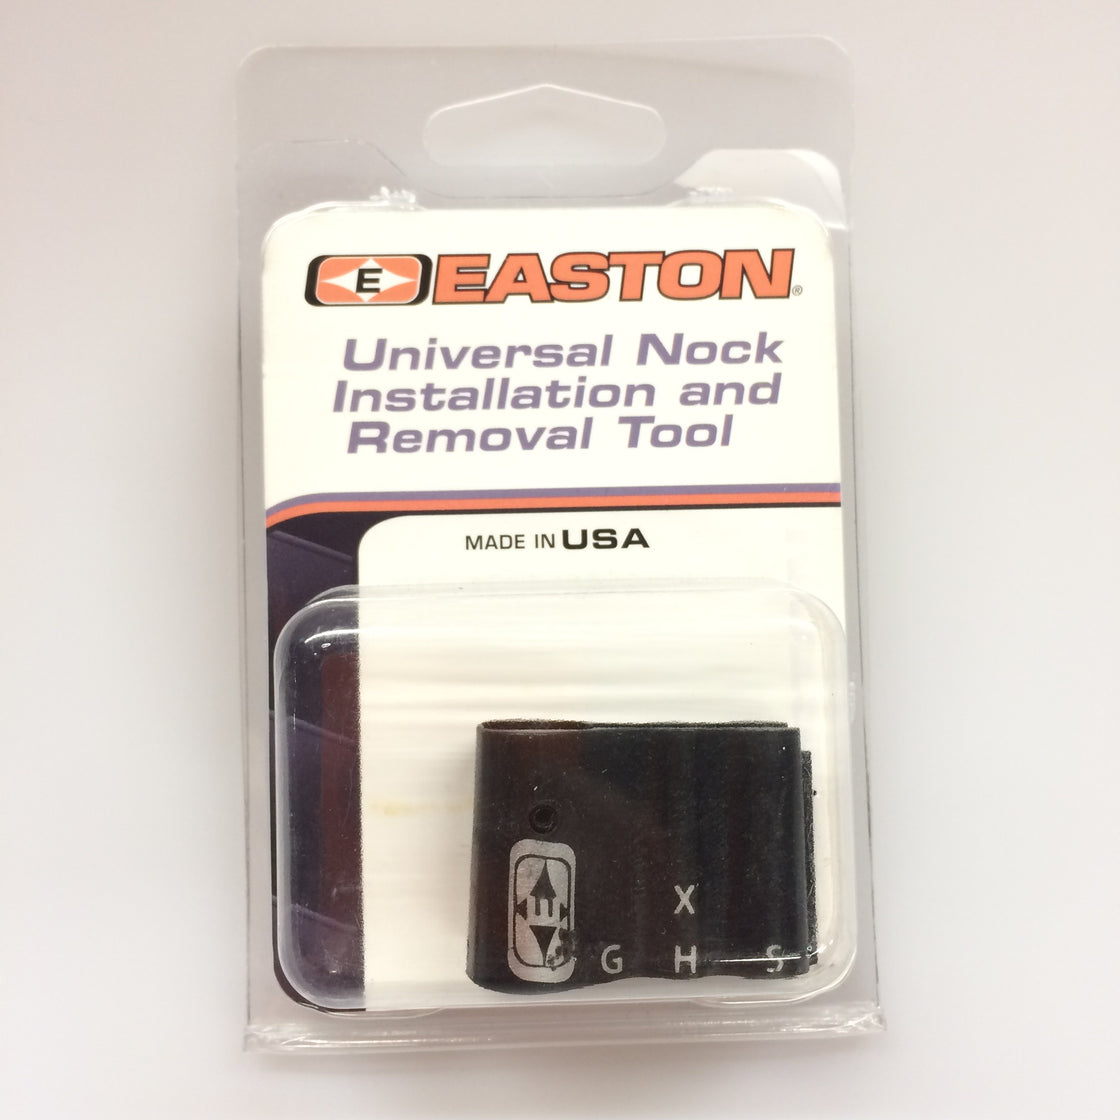 Easton Universal Nock Installation & Removal Tool